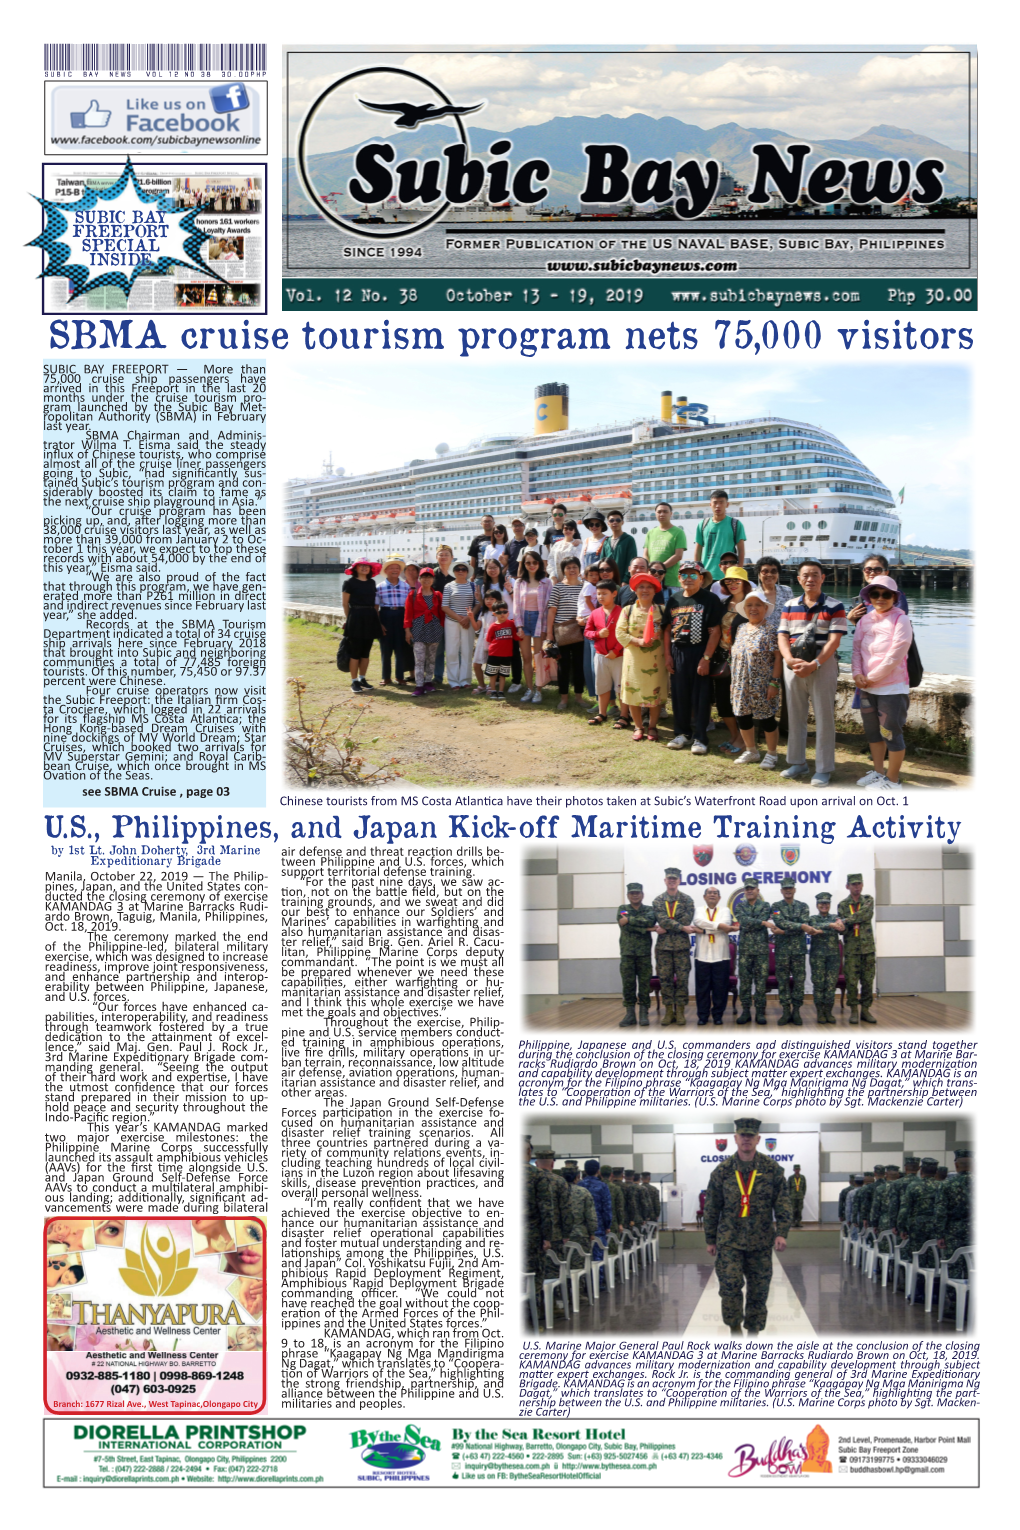 SBMA Cruise Tourism Program Nets 75,000 Visitors